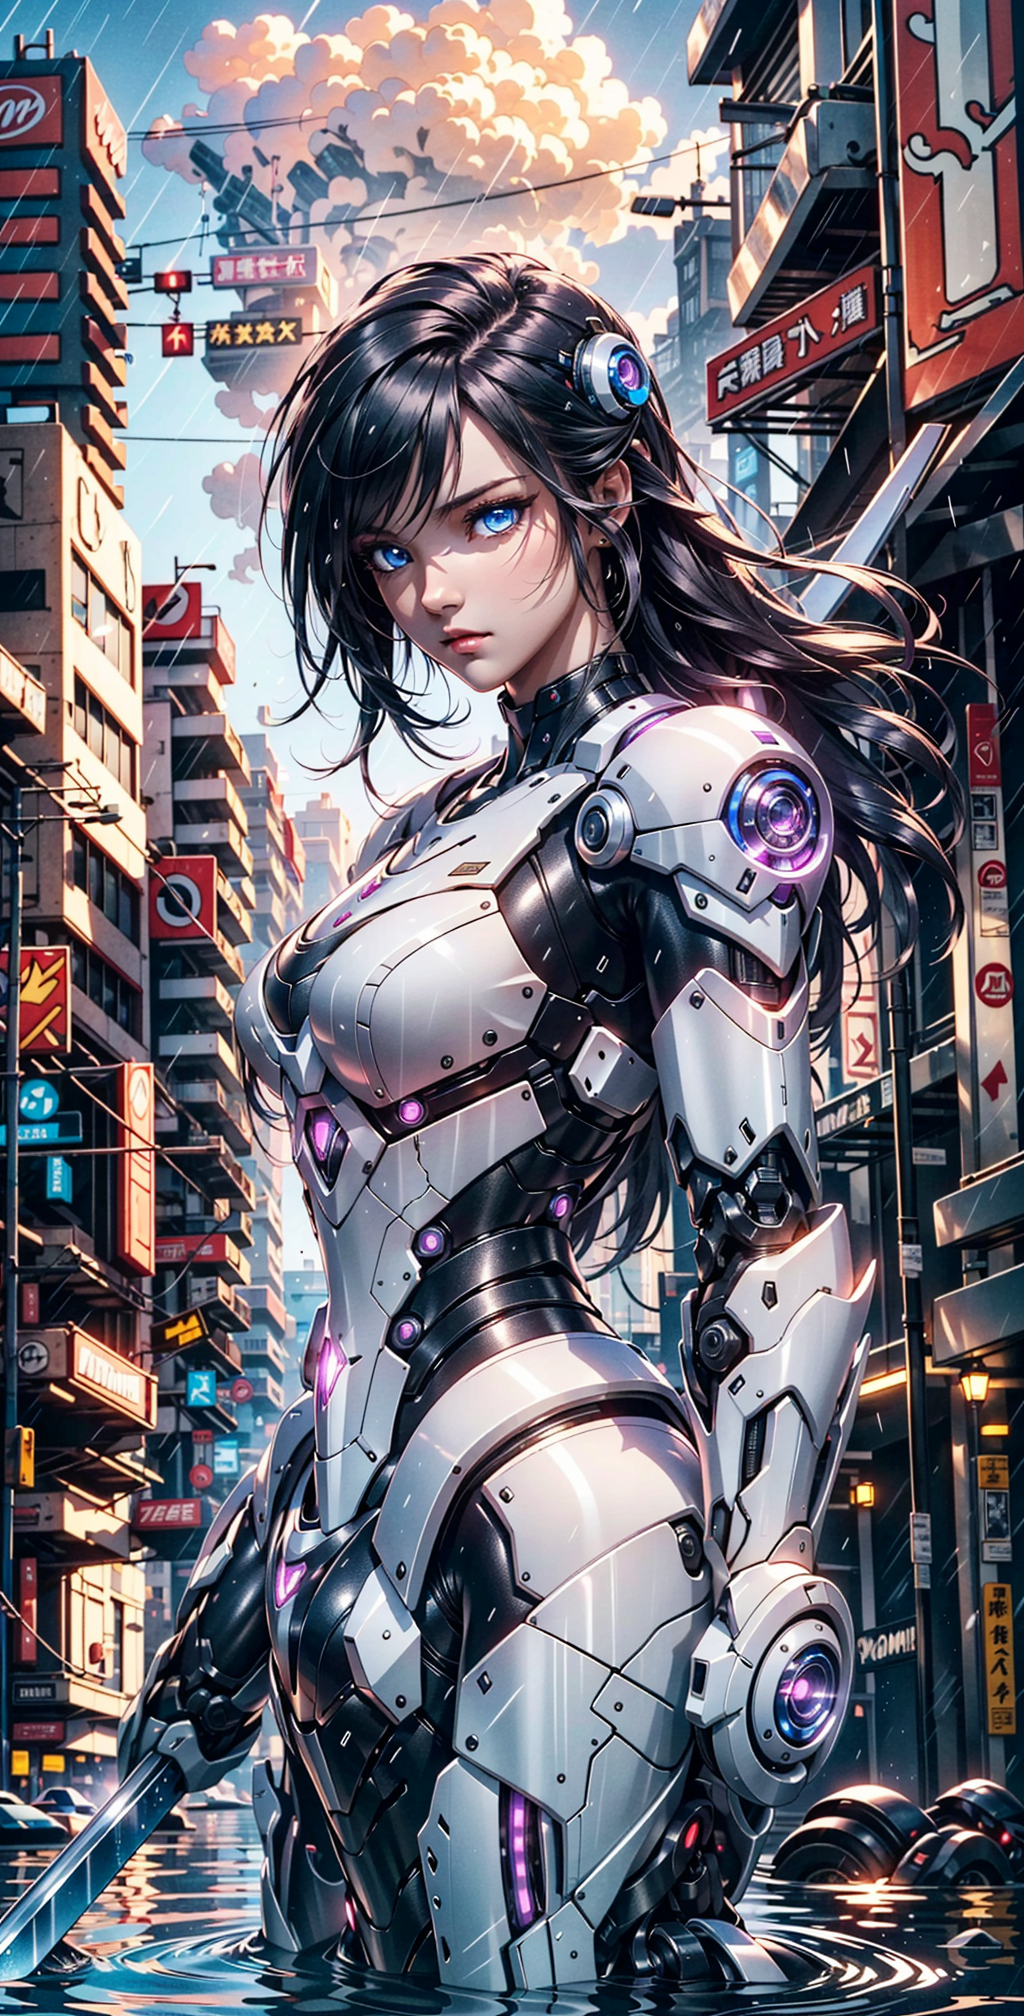 Anime Cyberpunk Girl 2 - Artworks